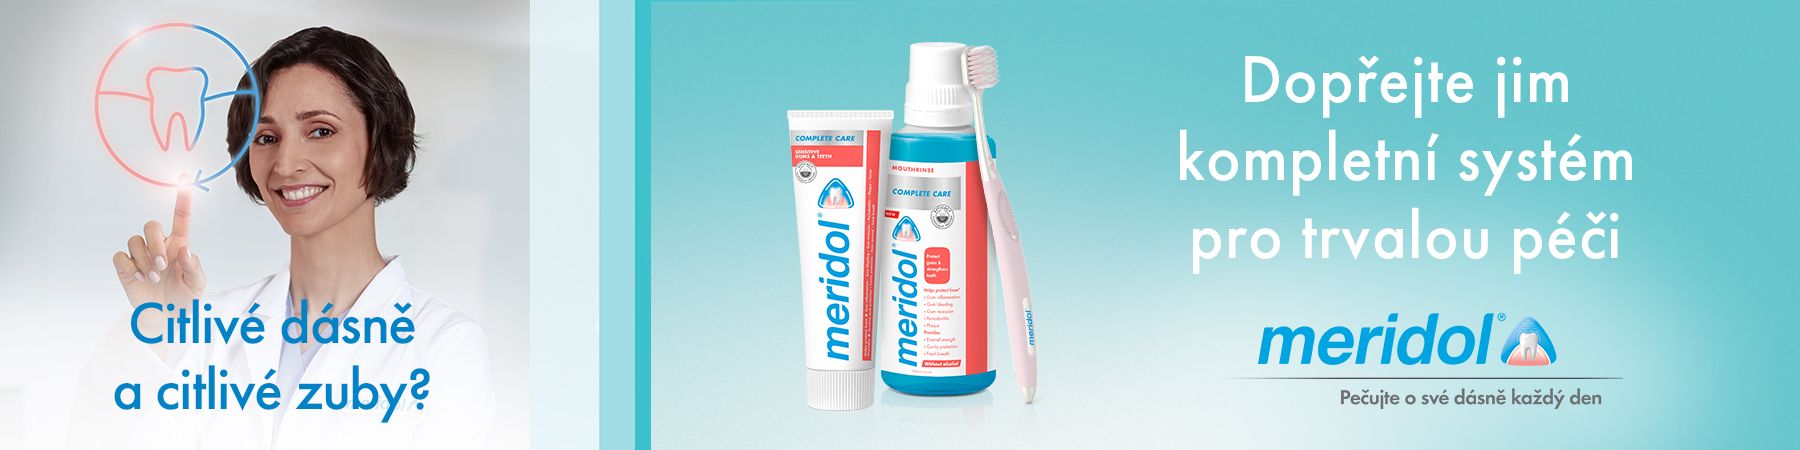 Meridol Complete Care zubní pasta 3 x 75 ml 